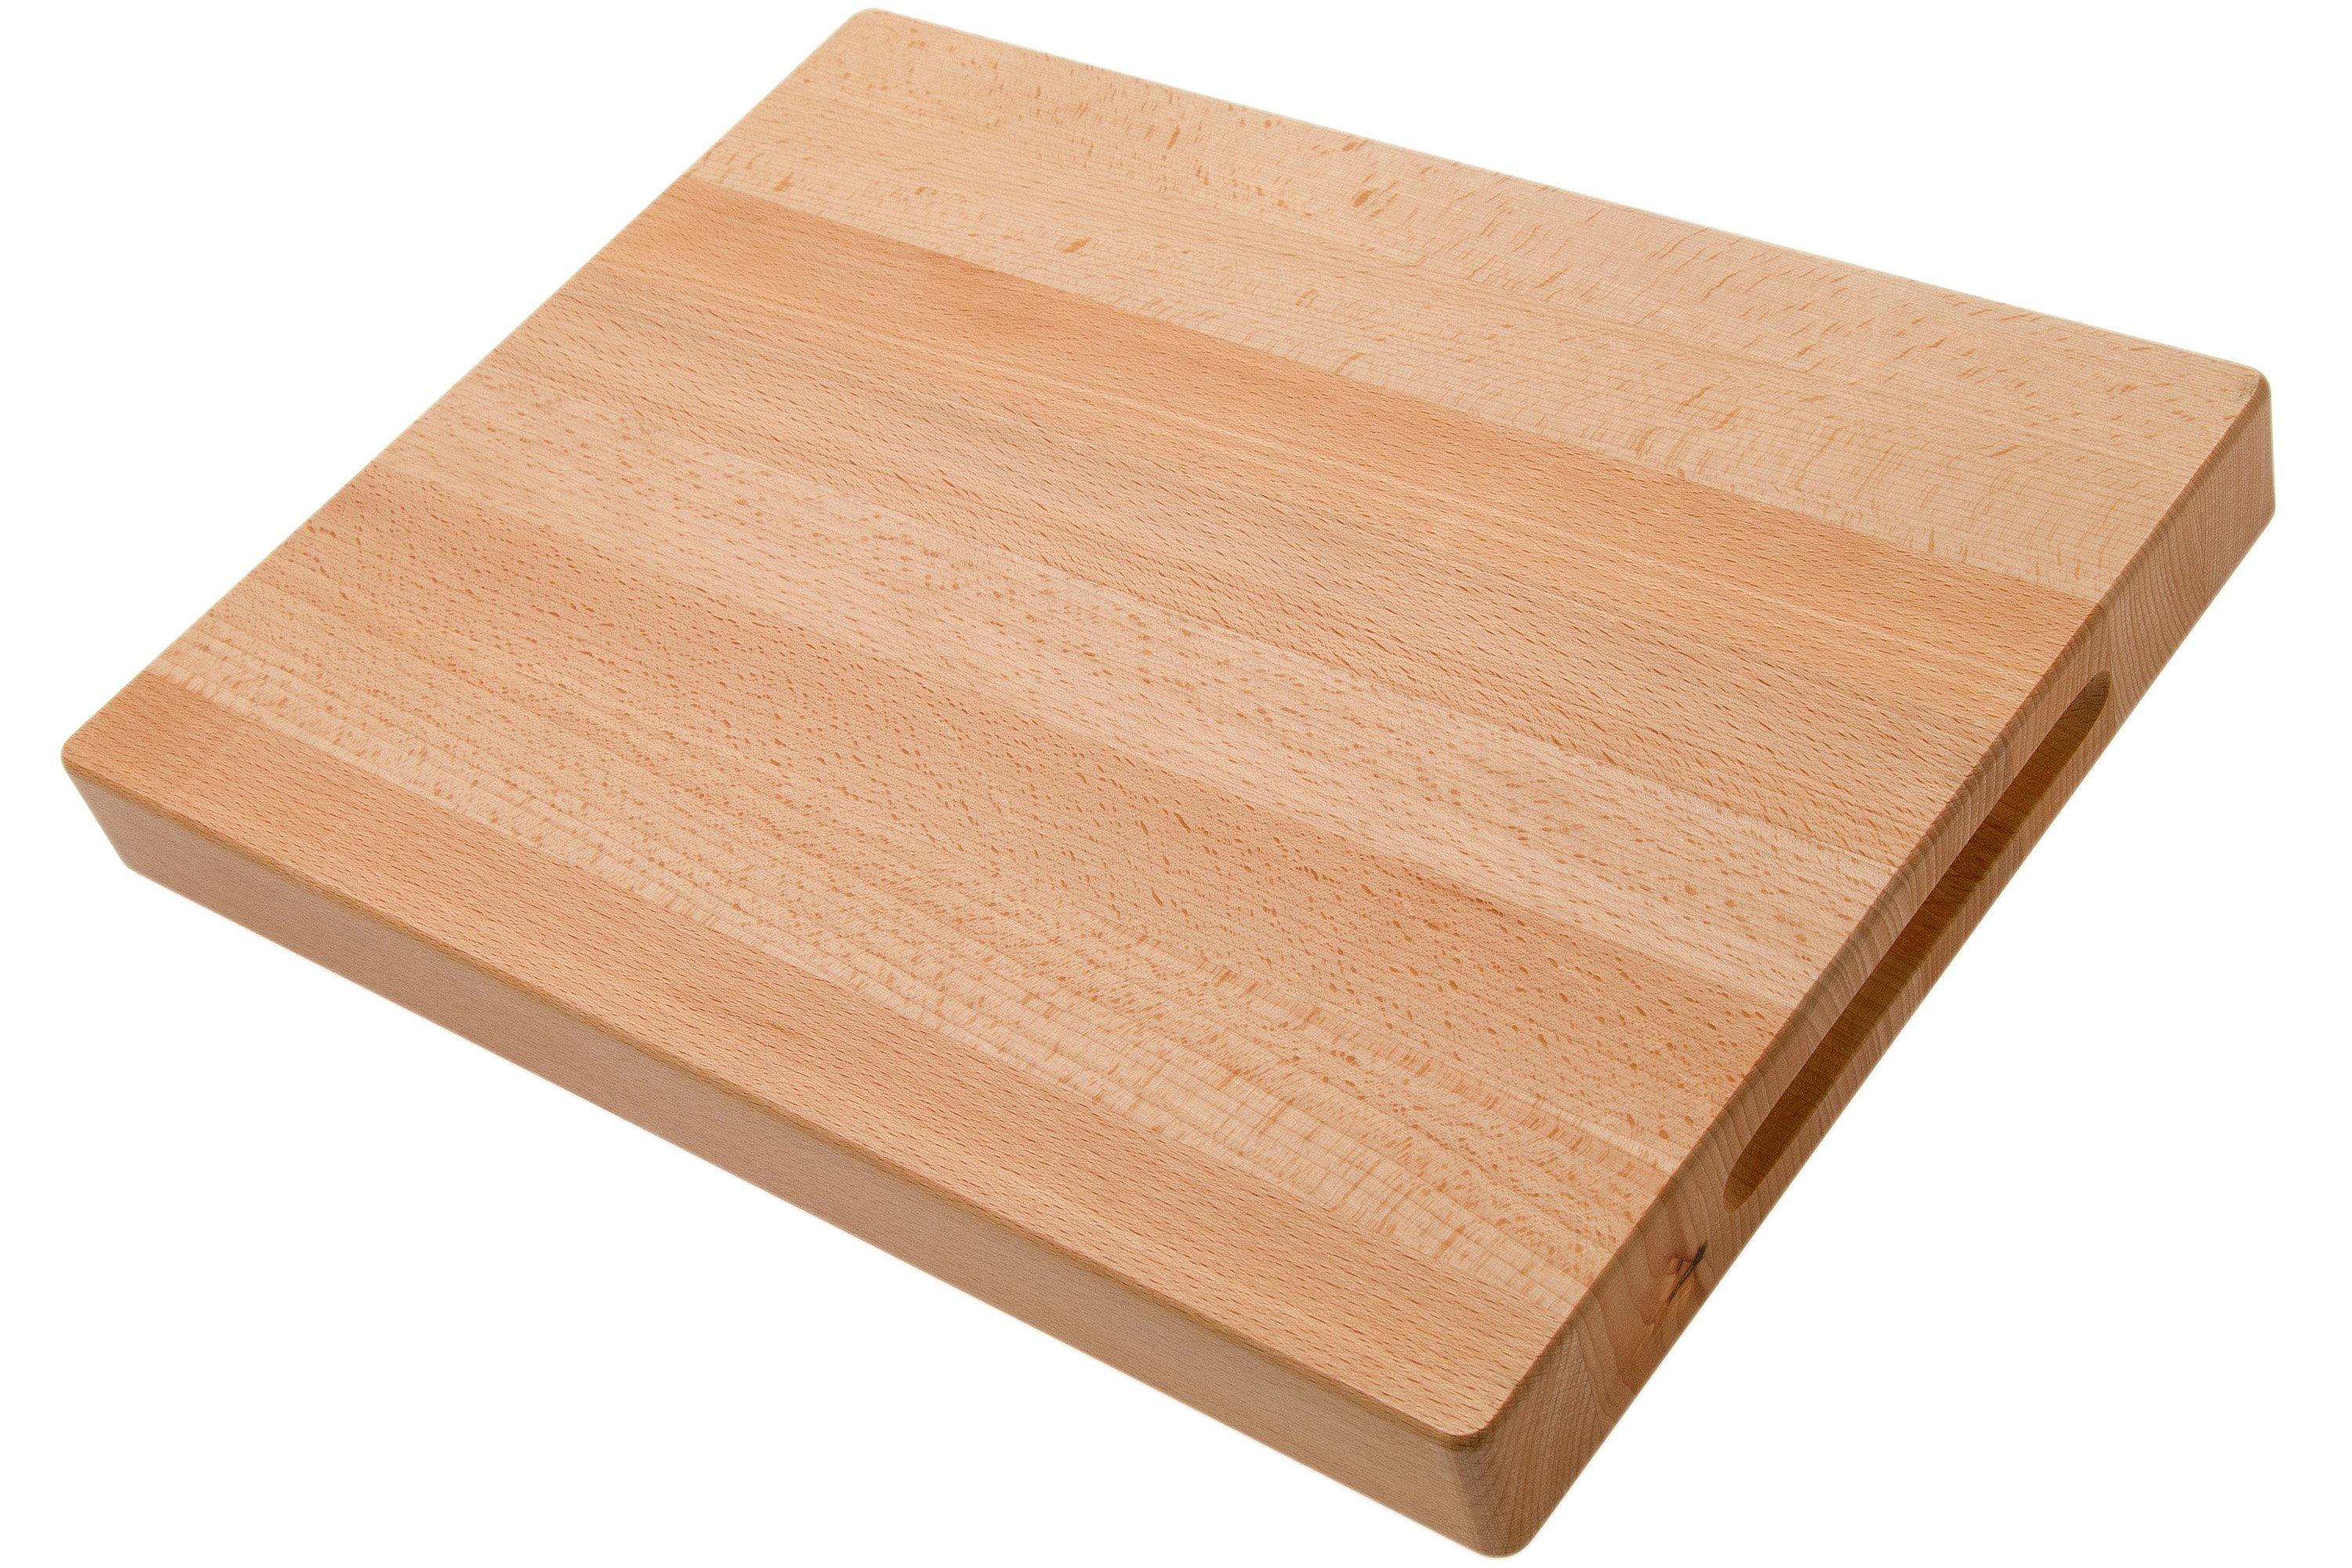 Il Cucinino cutting board with handle, beech wood 45x31 cm